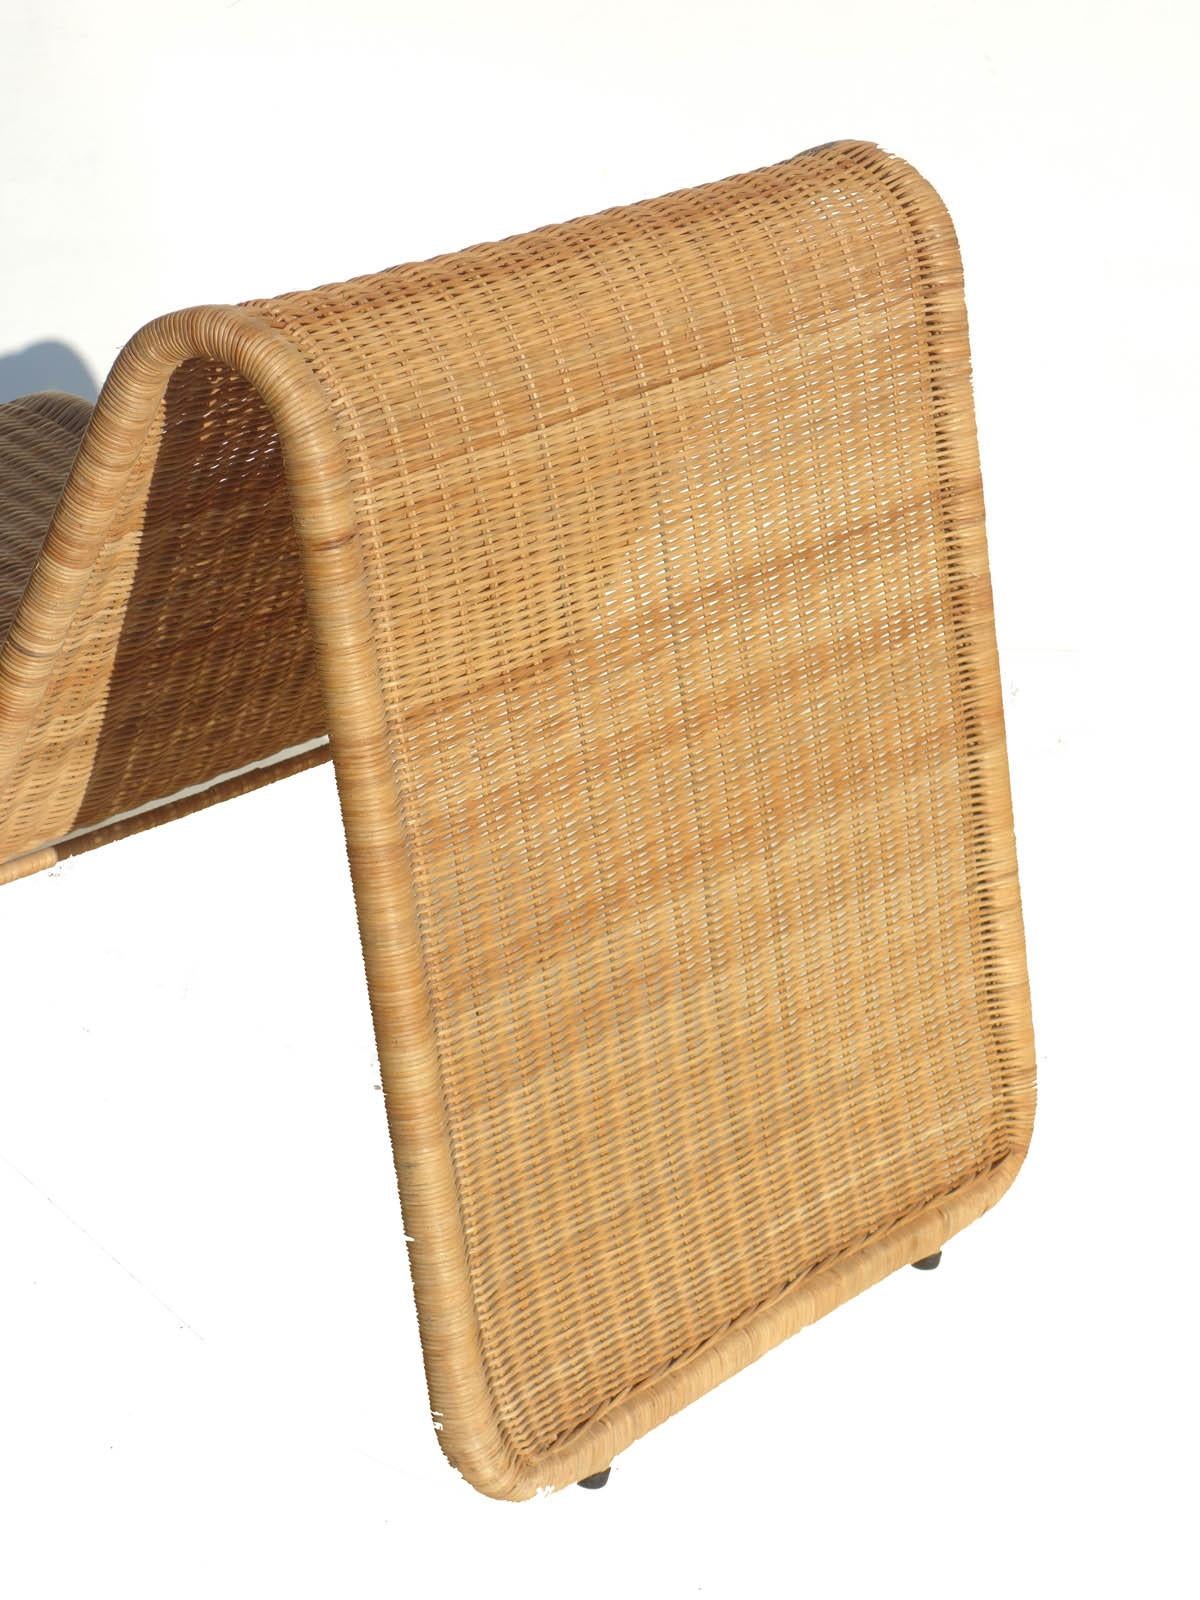 1950s Wicker Rattan Italian Design Midcentury Armchair Lounge Chair, Set of 2 2